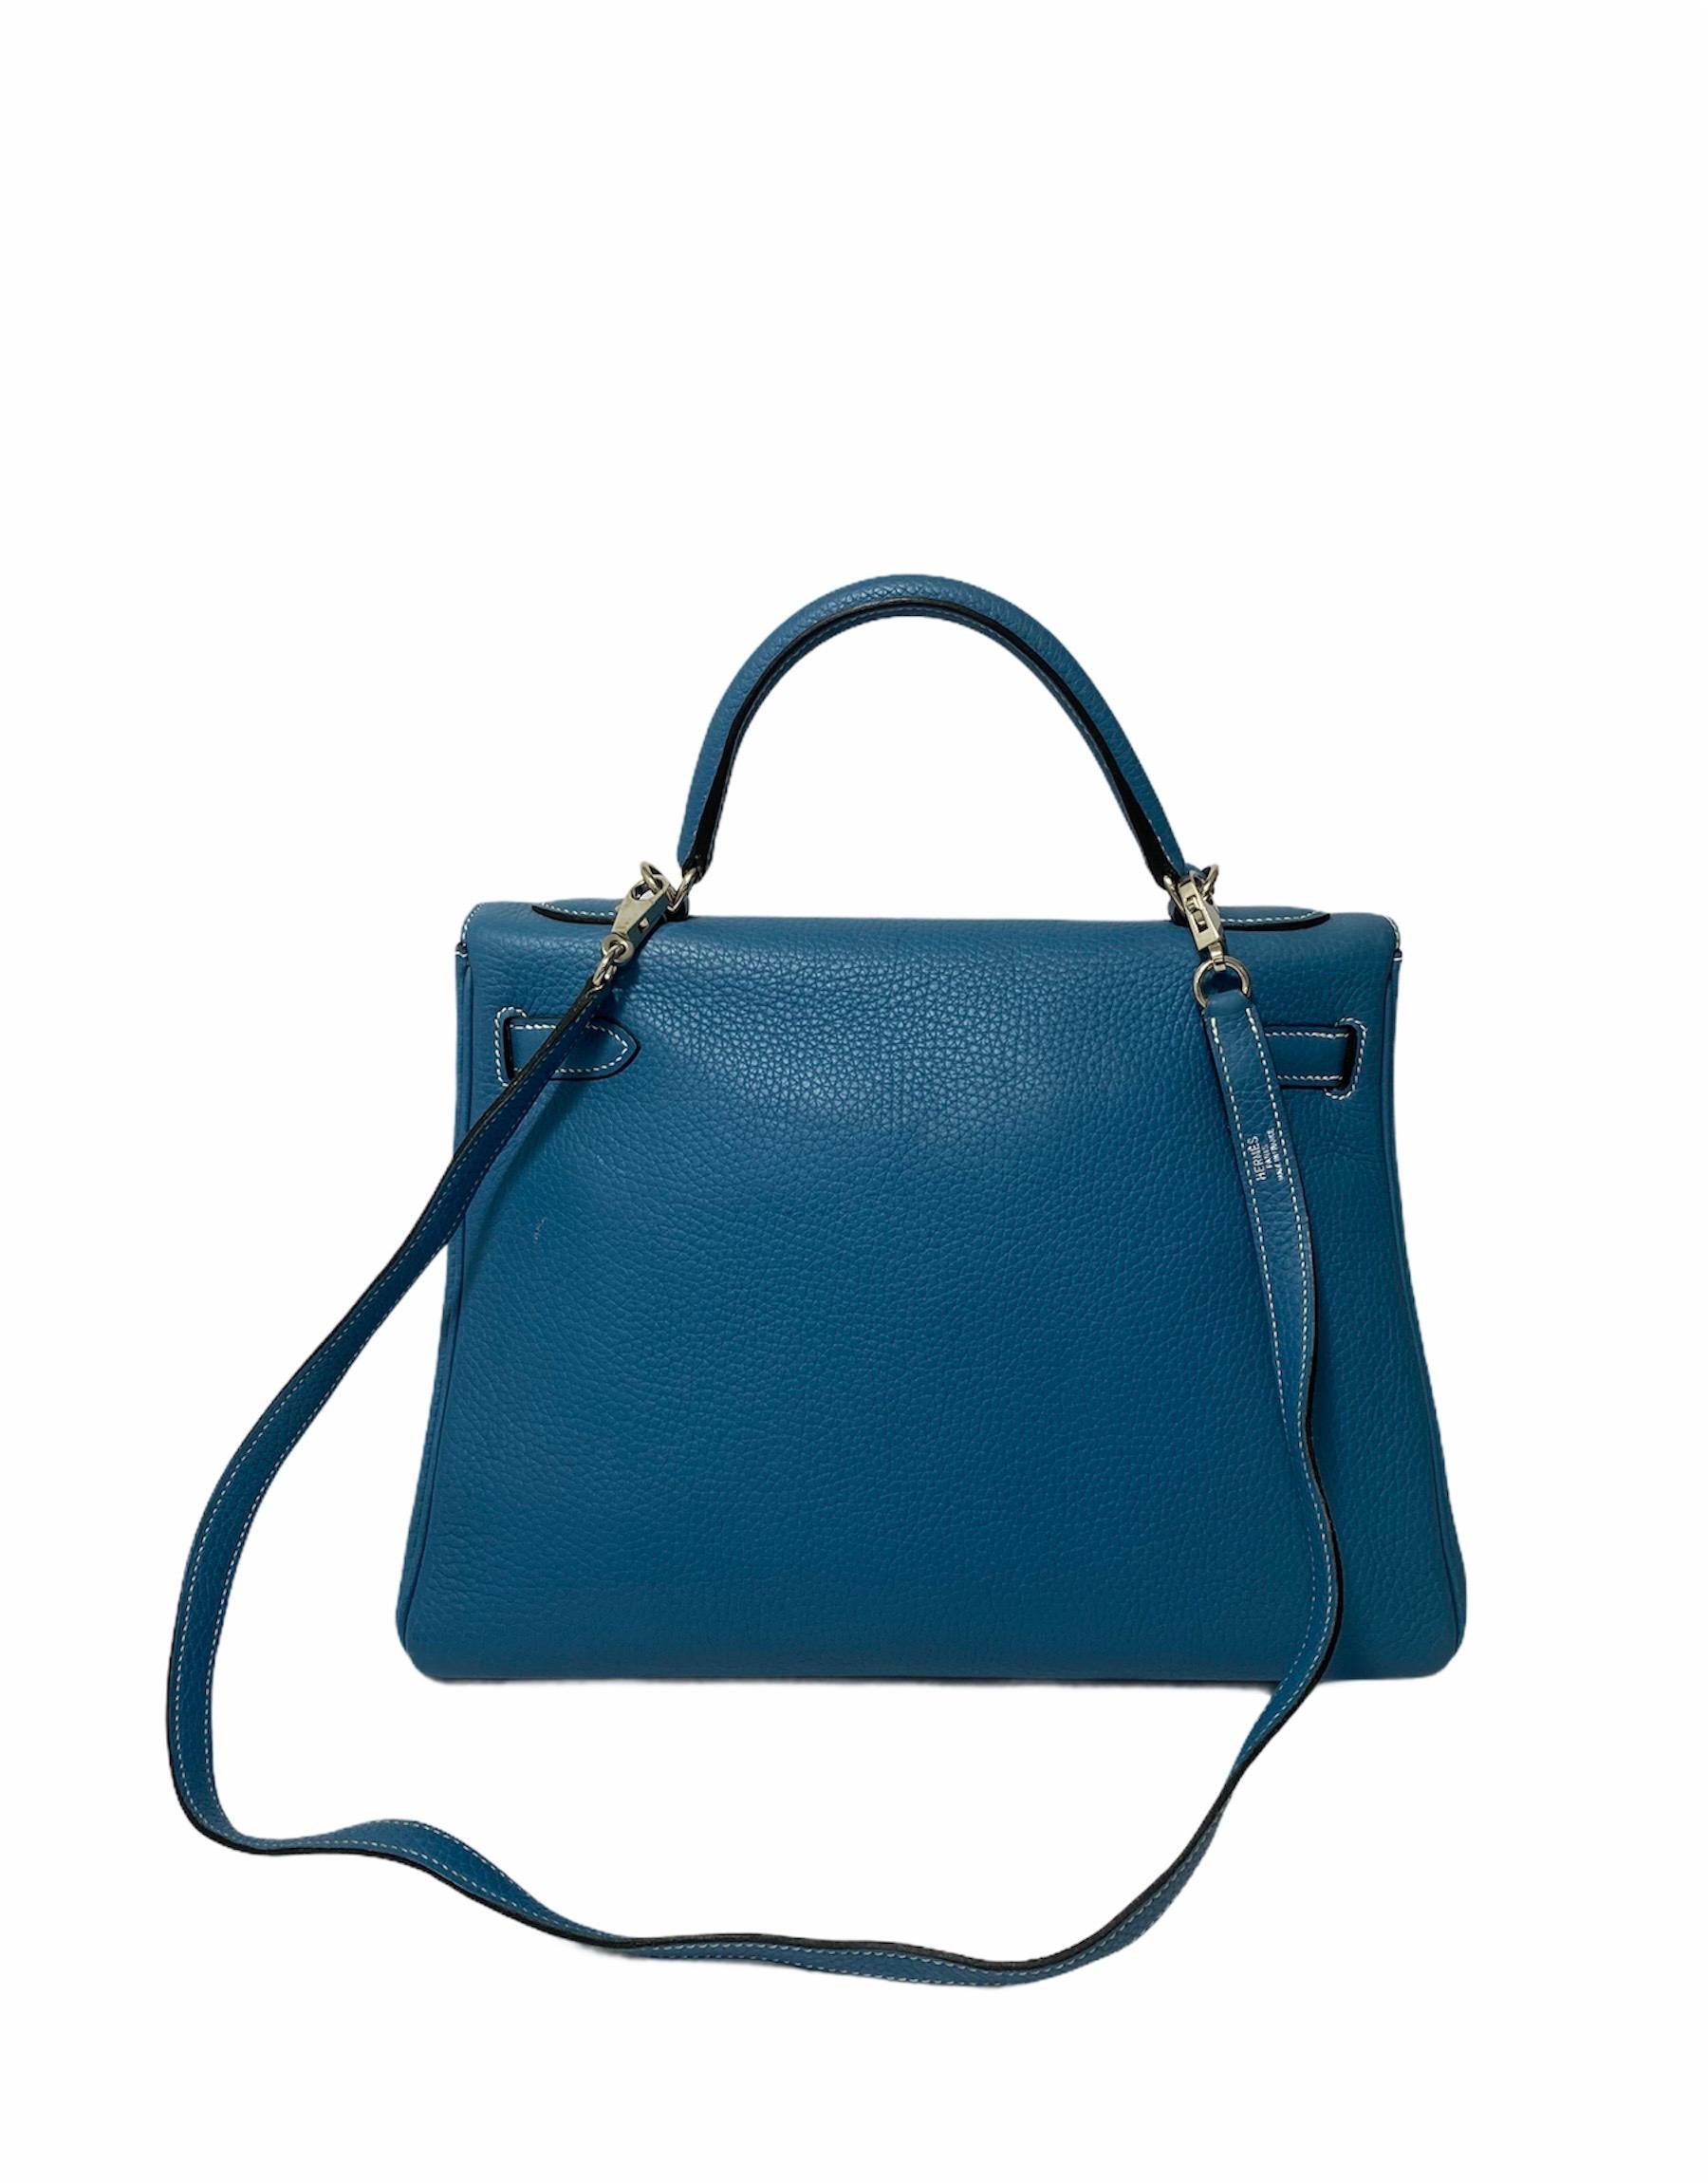 2006 Hermès Blue Jean Togo Kelly 32 Bag 3